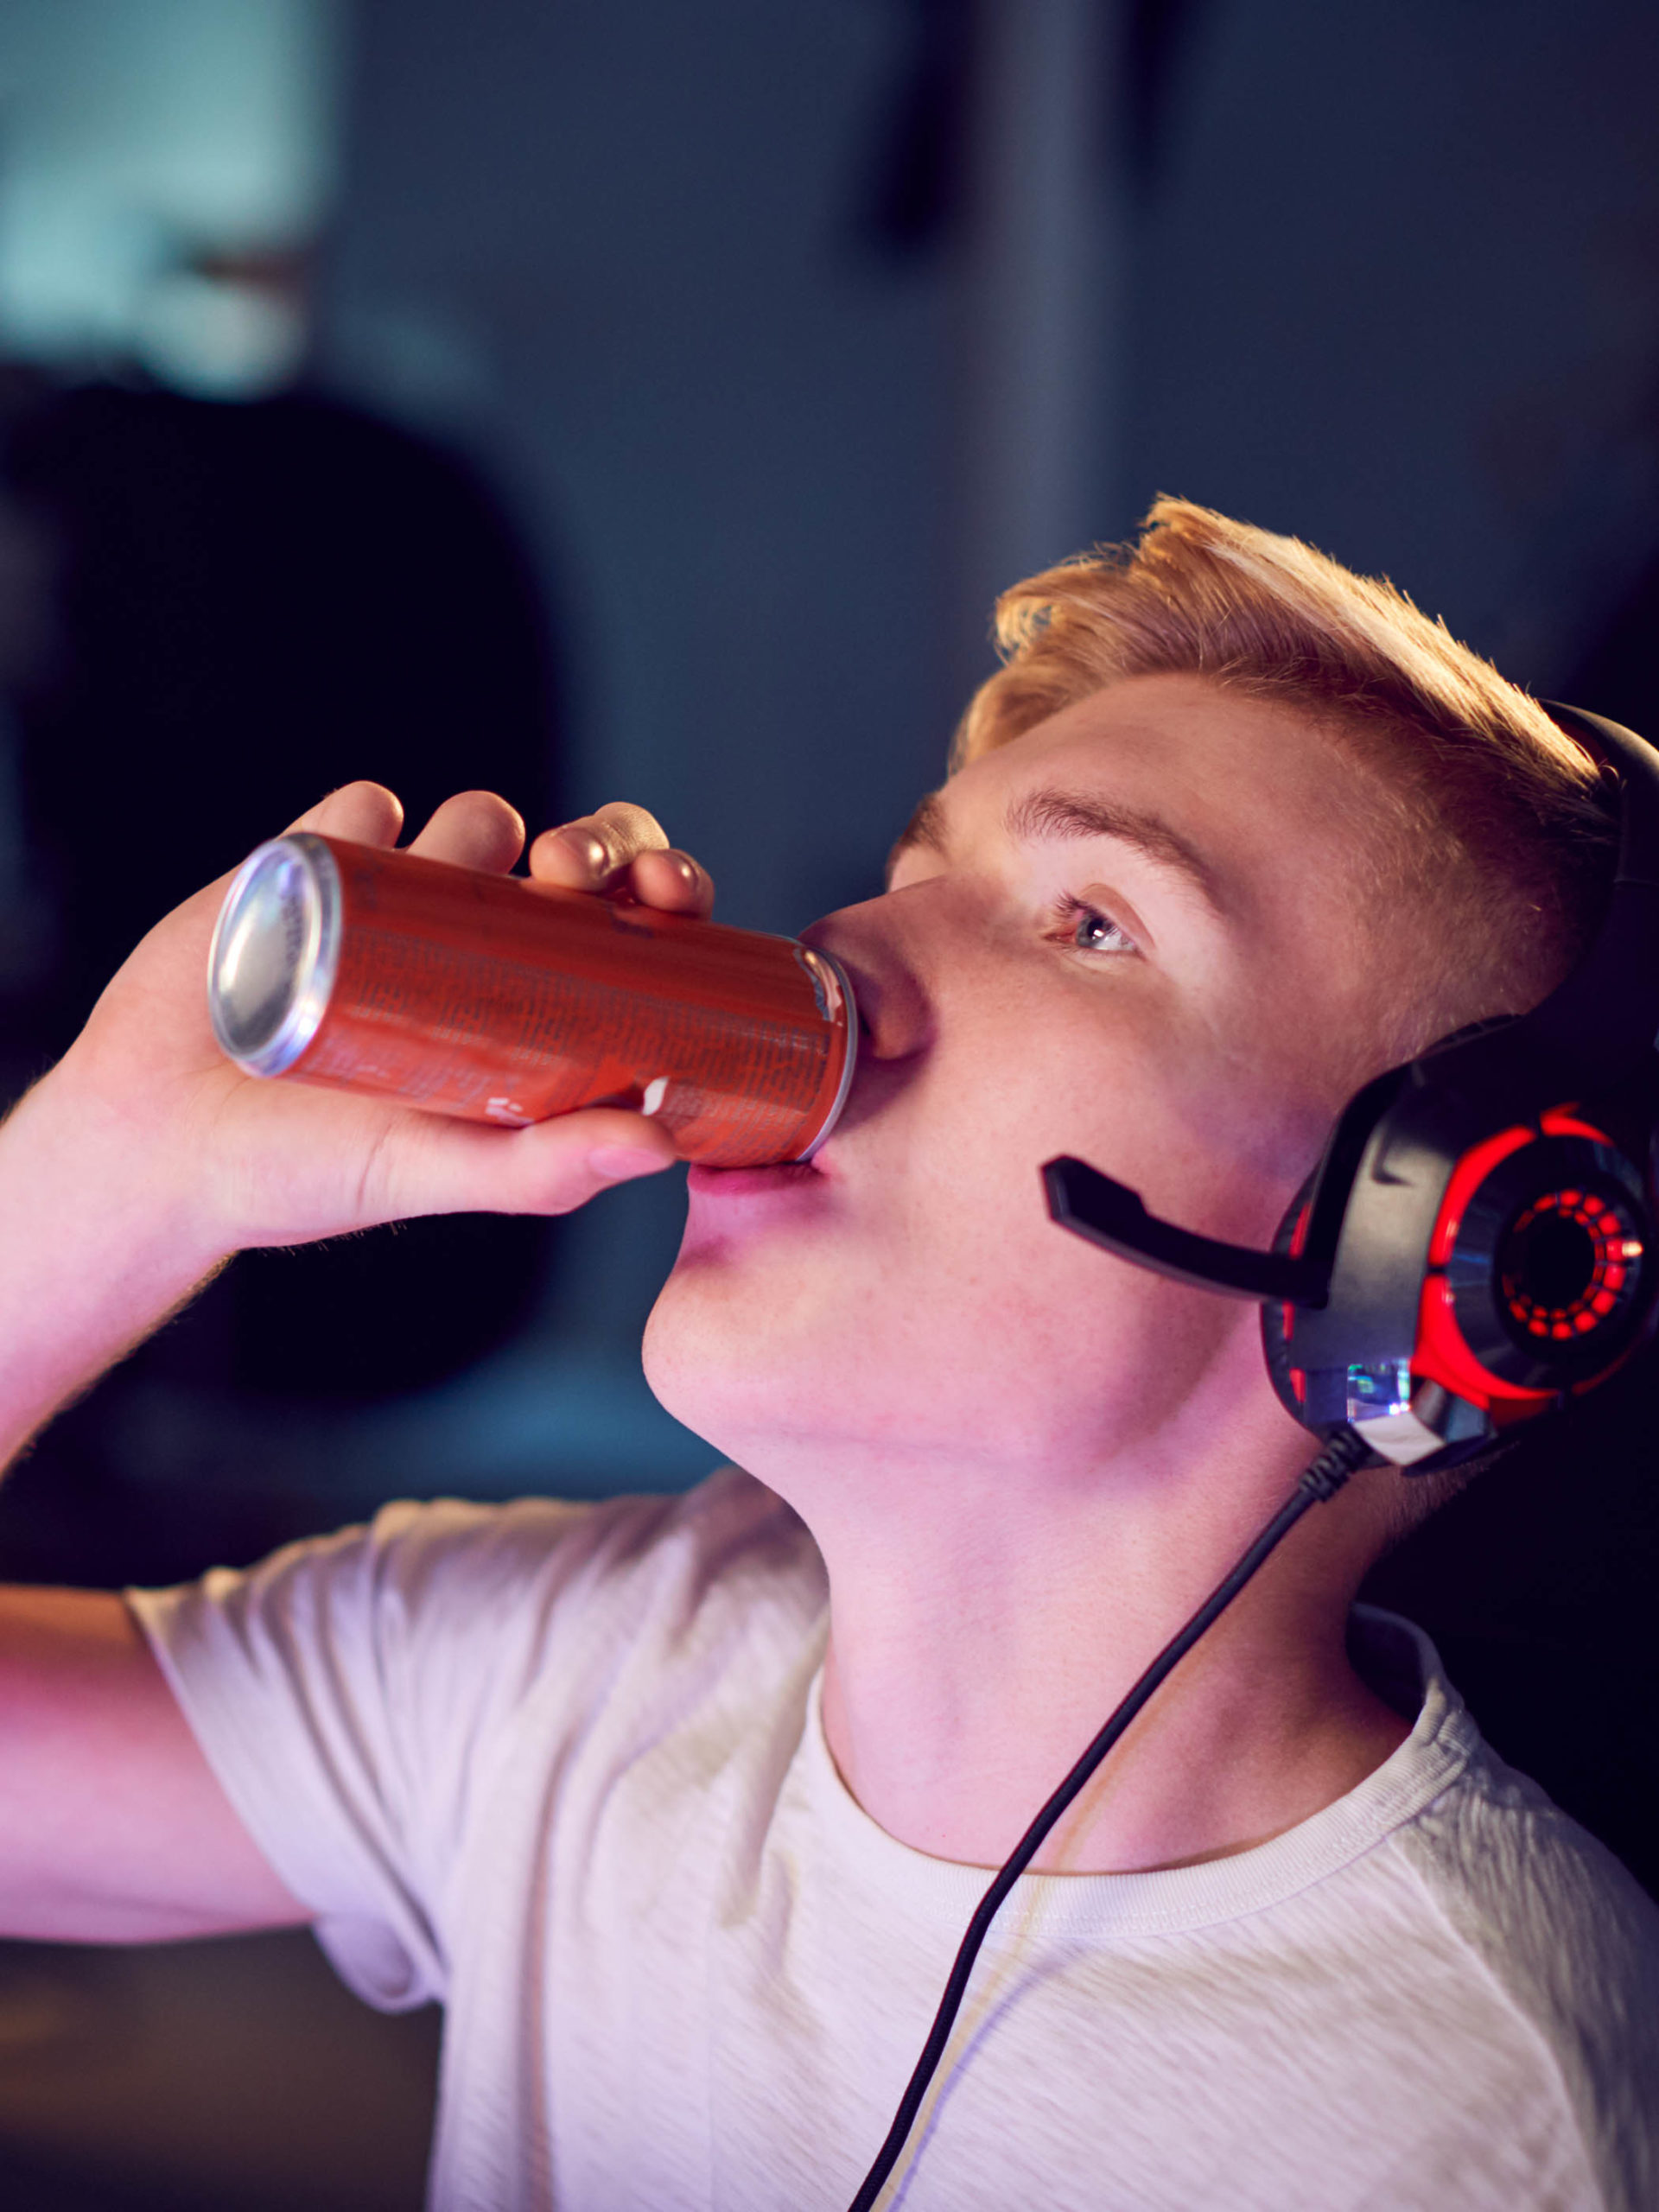 Teenage Boy Drinking Caffeine Energy Drink while Gaming